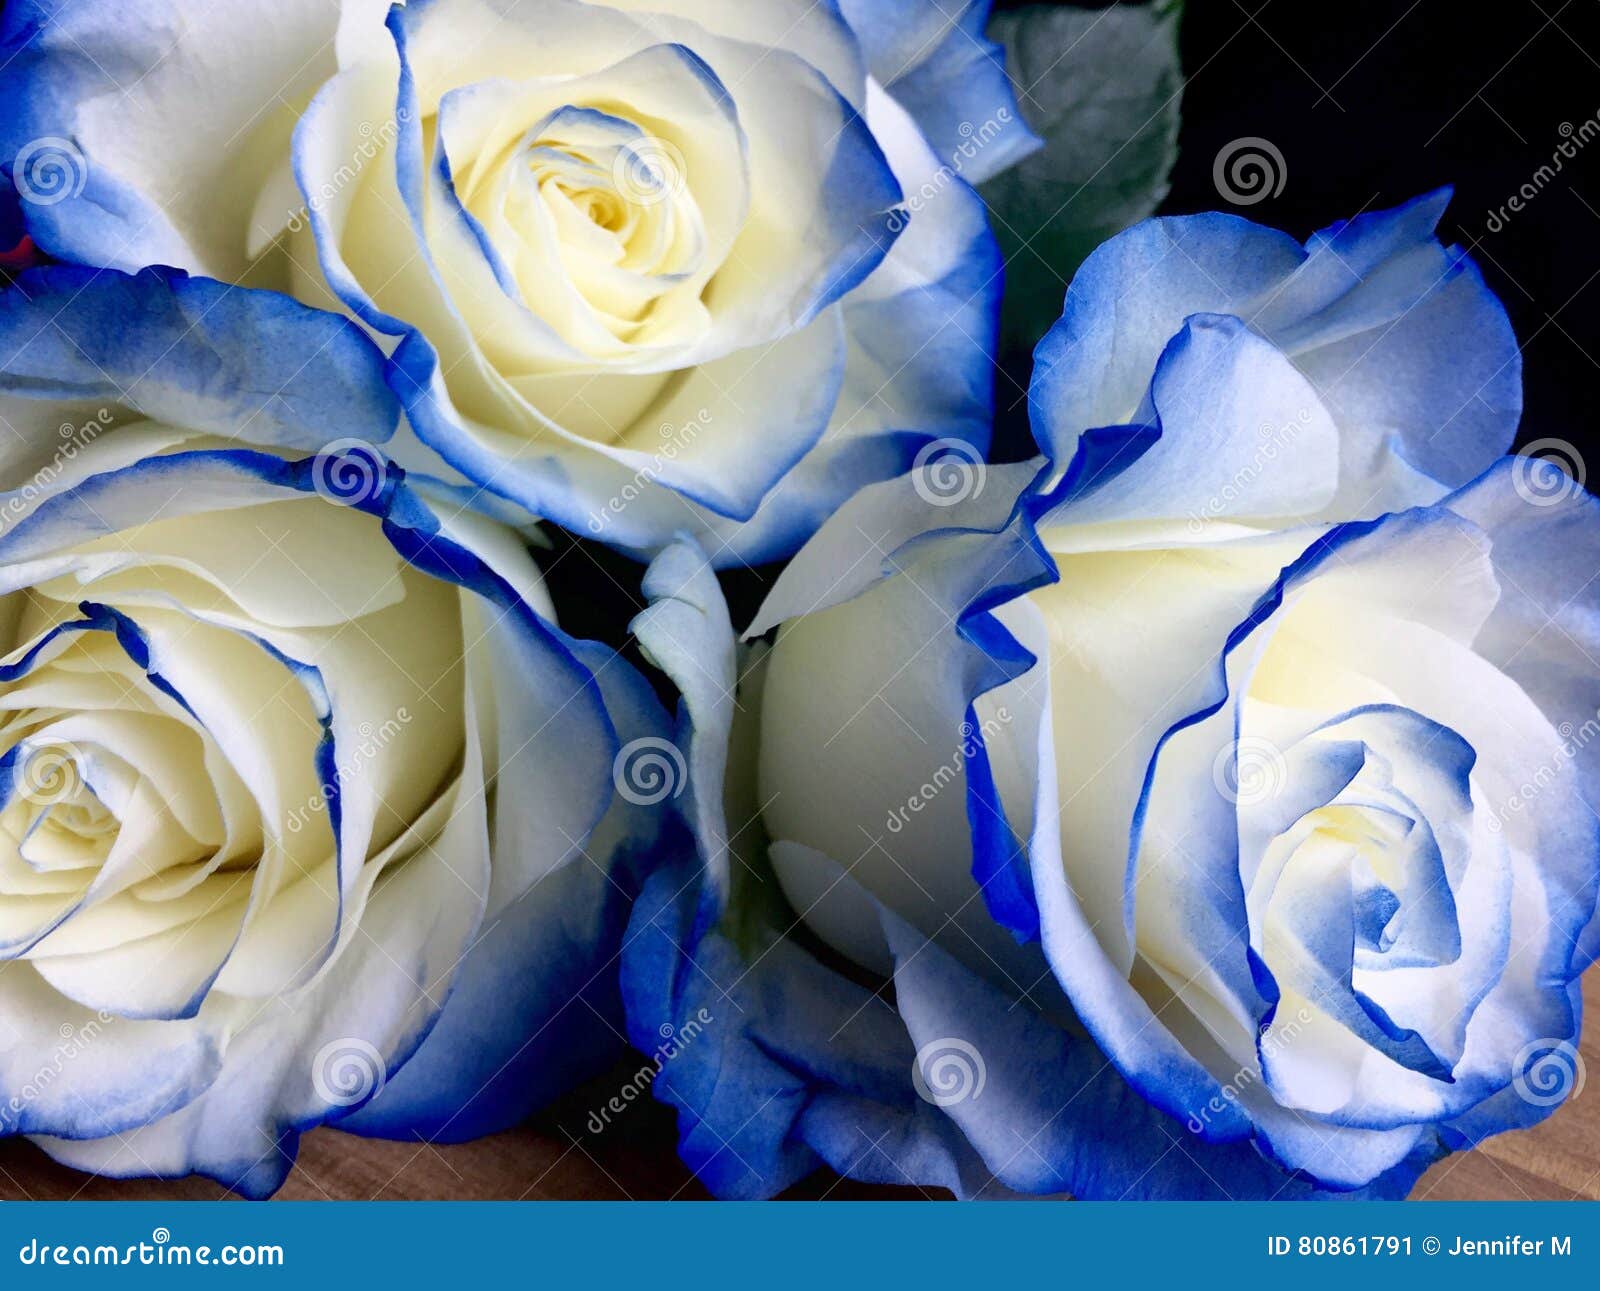 White and blue roses stock image. Image of blue, romance - 80861791